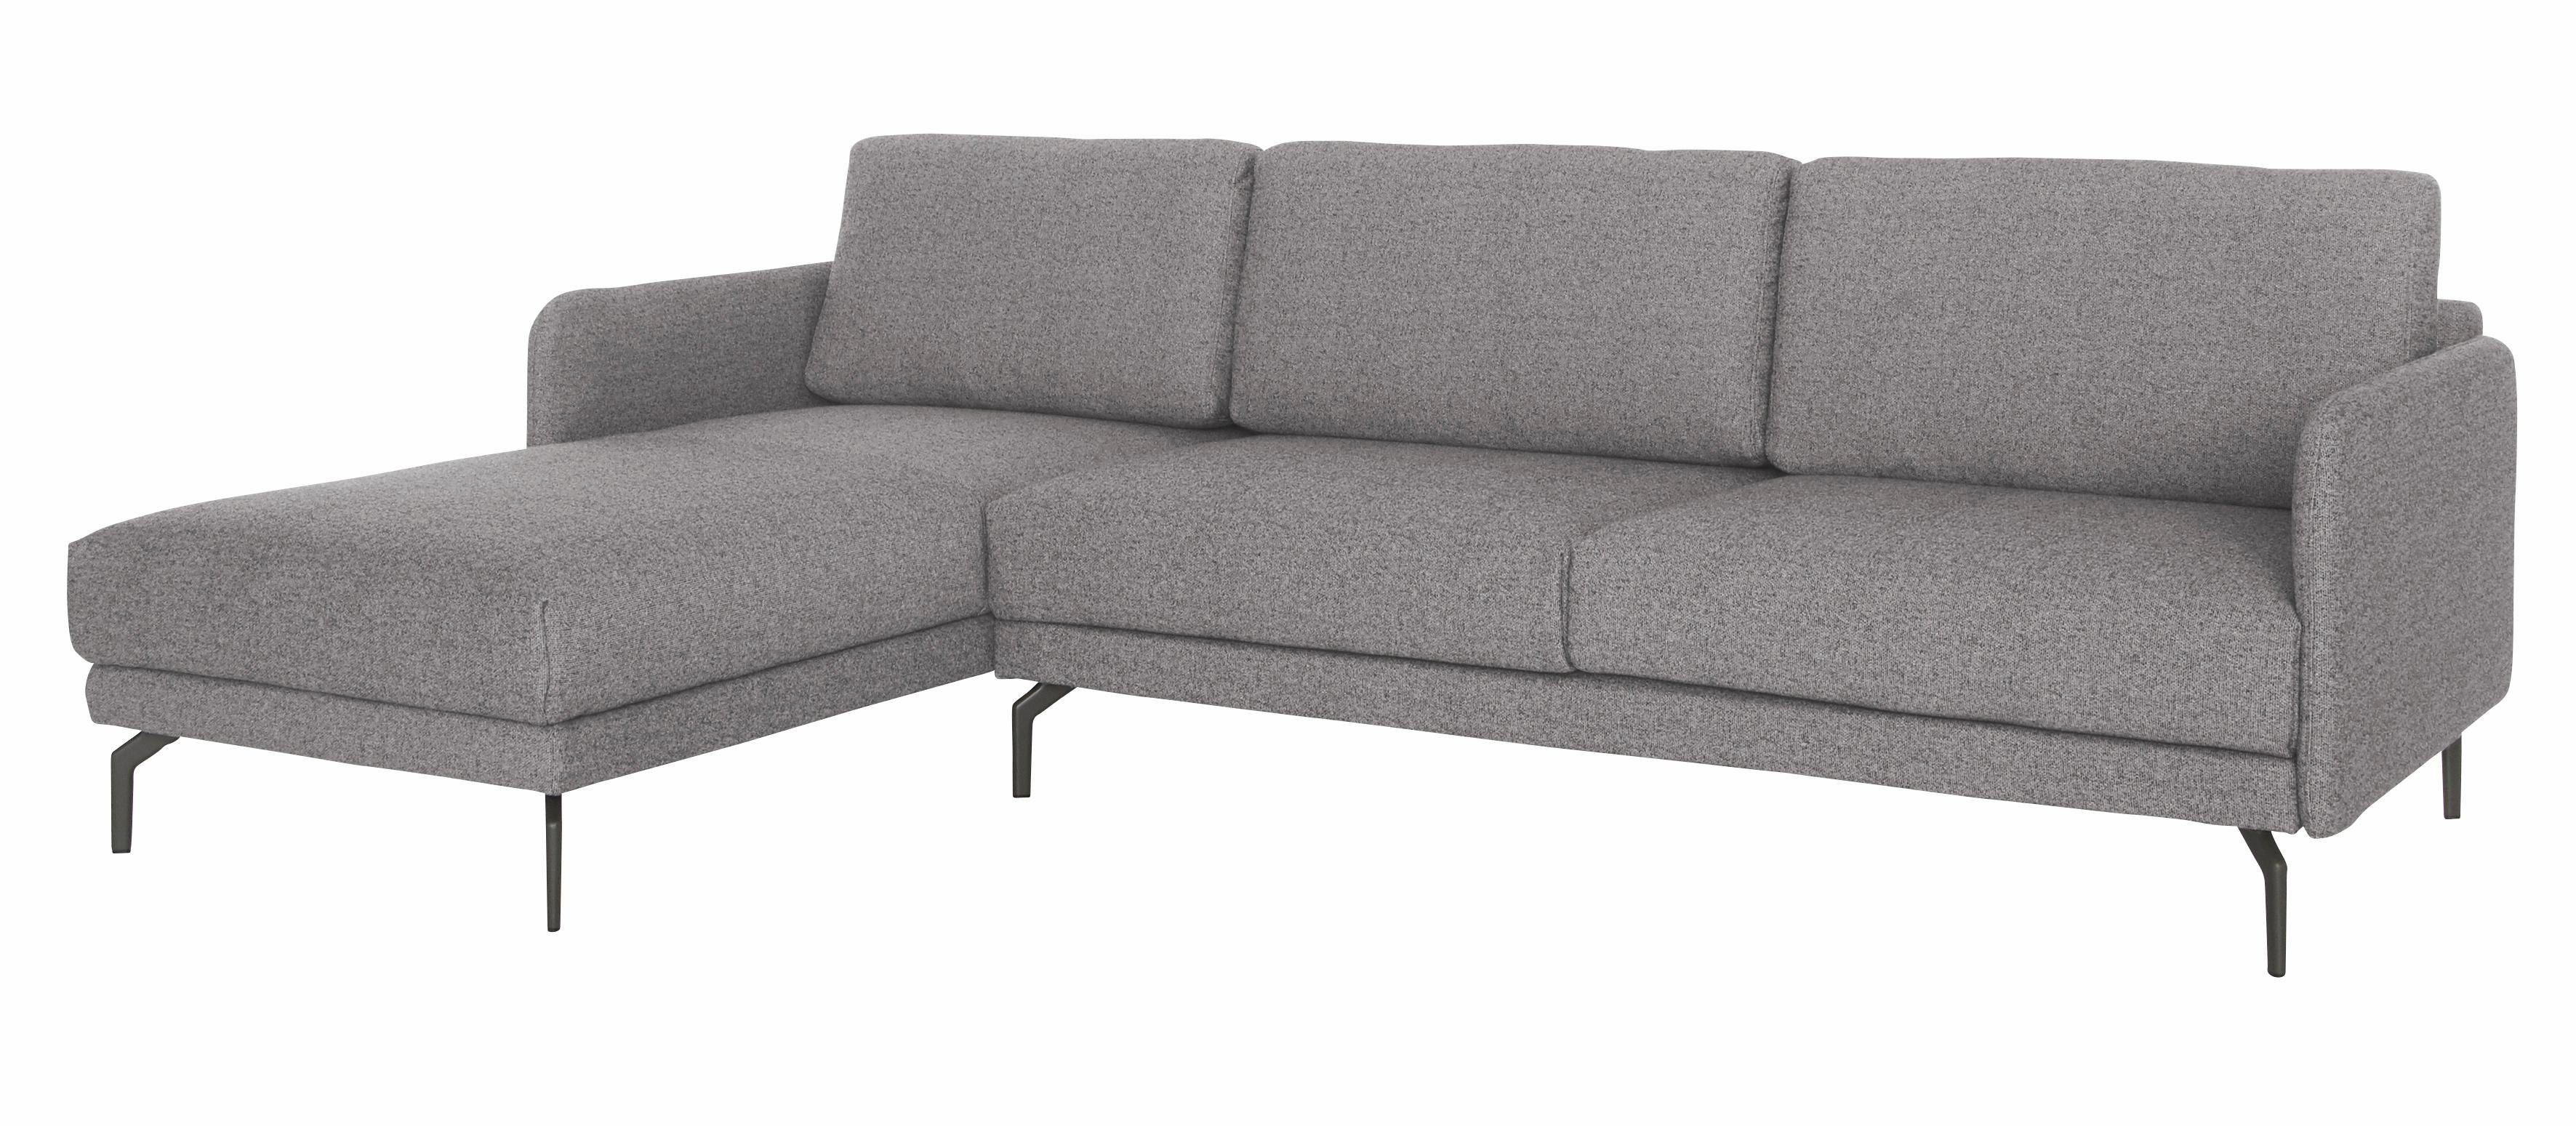 hülsta sofa Ecksofa hs.450, Armlehne sehr schmal, Breite 234 cm,  Alugussfüße in umbragrau